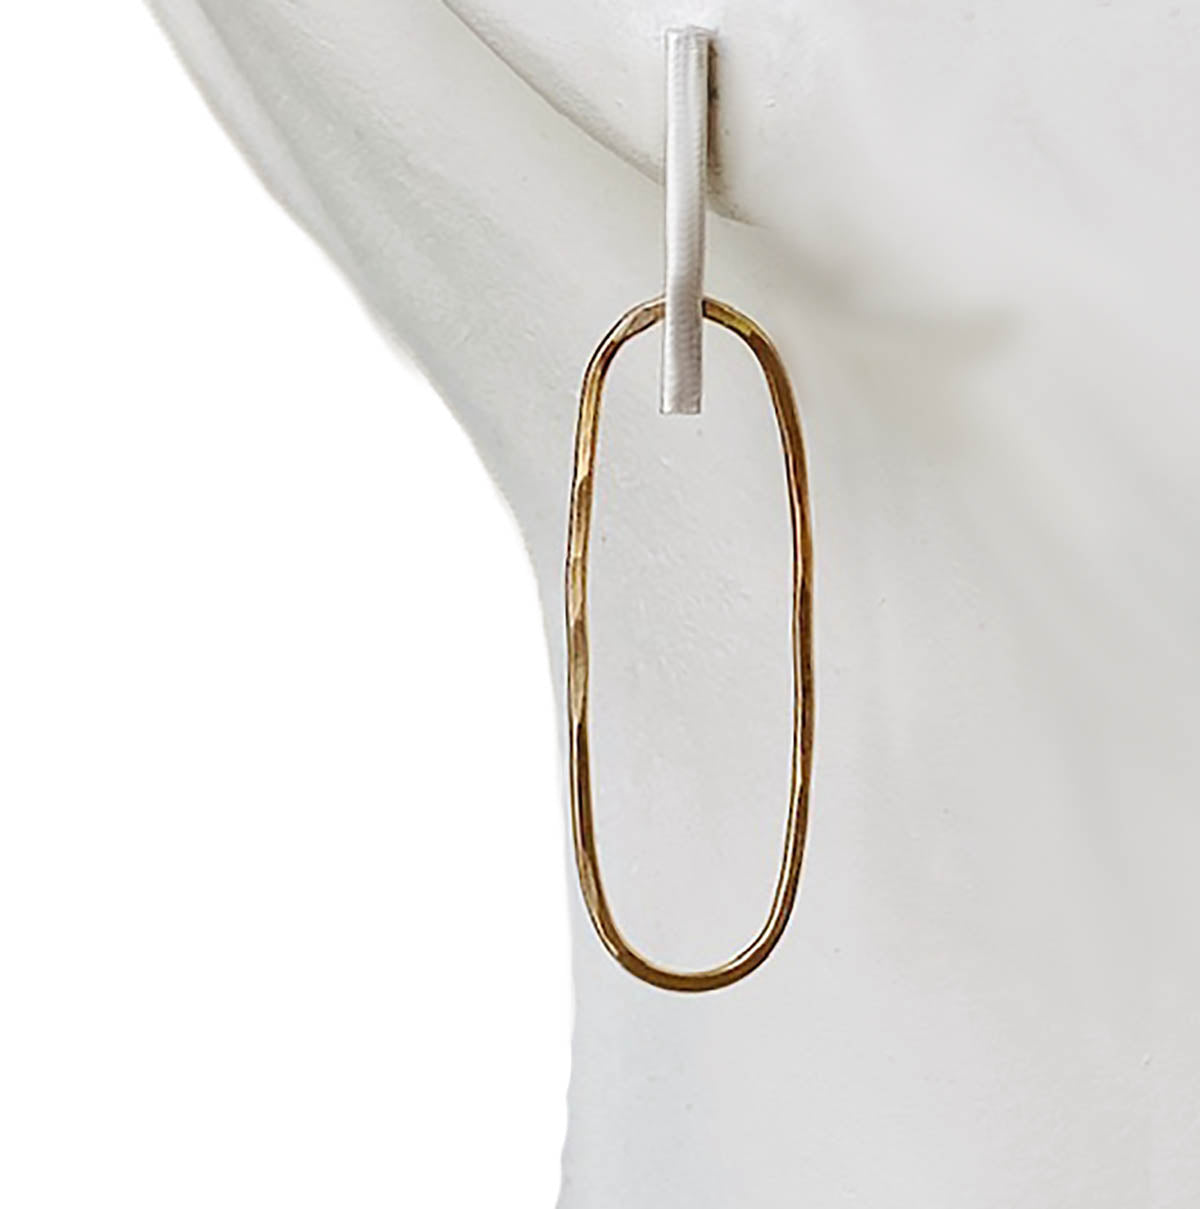 Bar Oval Earrings - 14K Gold Filled Hoops on Sterling Silver Bars